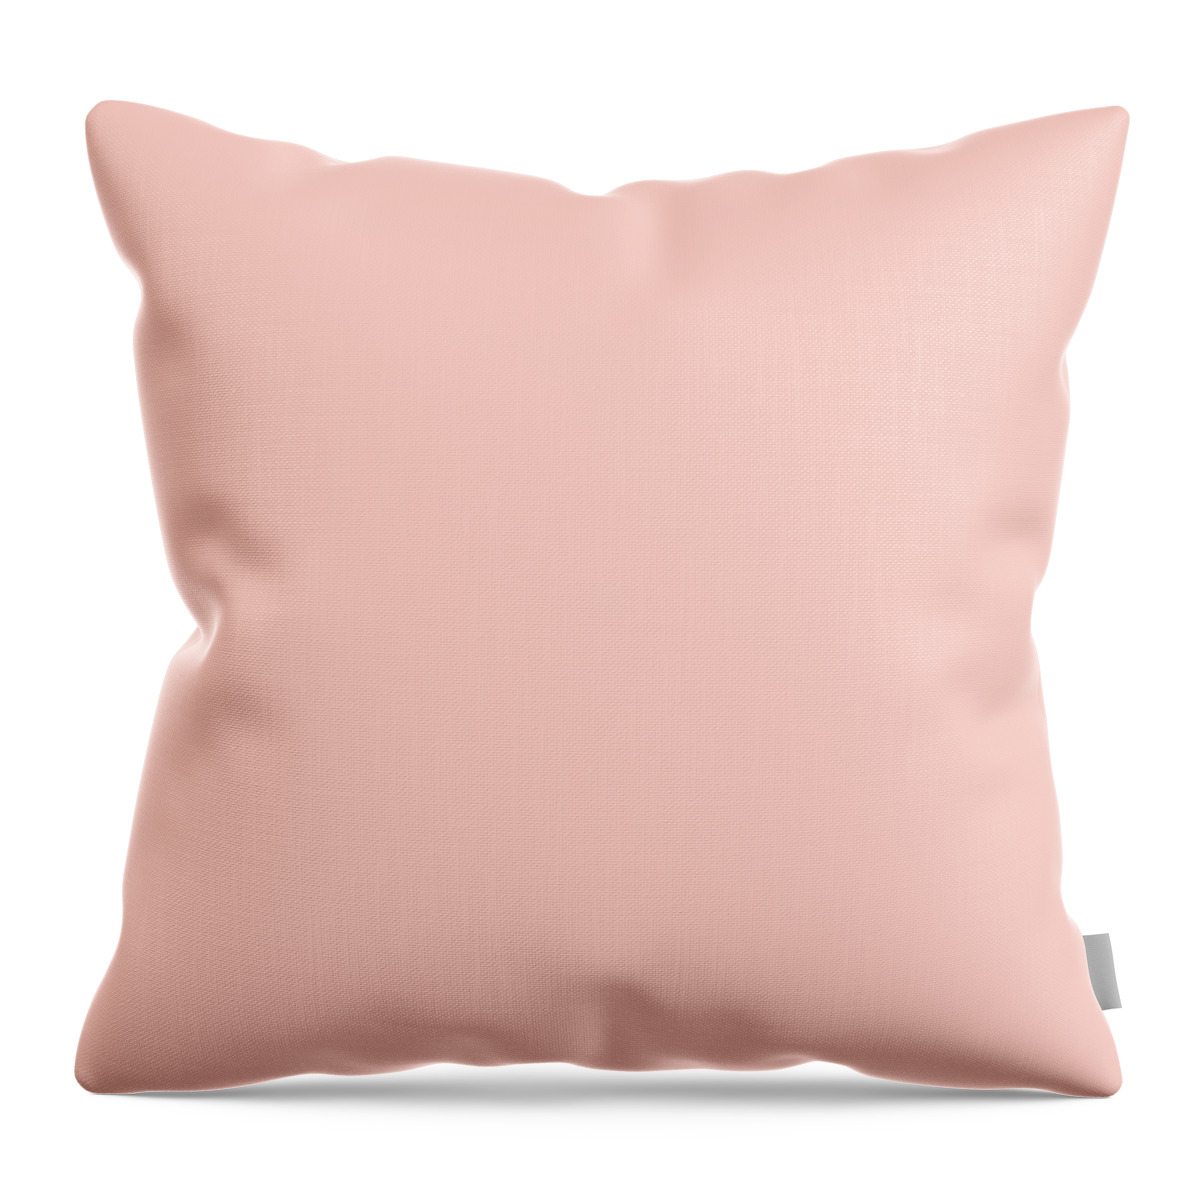 Rose Quartz Throw Pillow featuring the digital art Rose Quartz by TintoDesigns